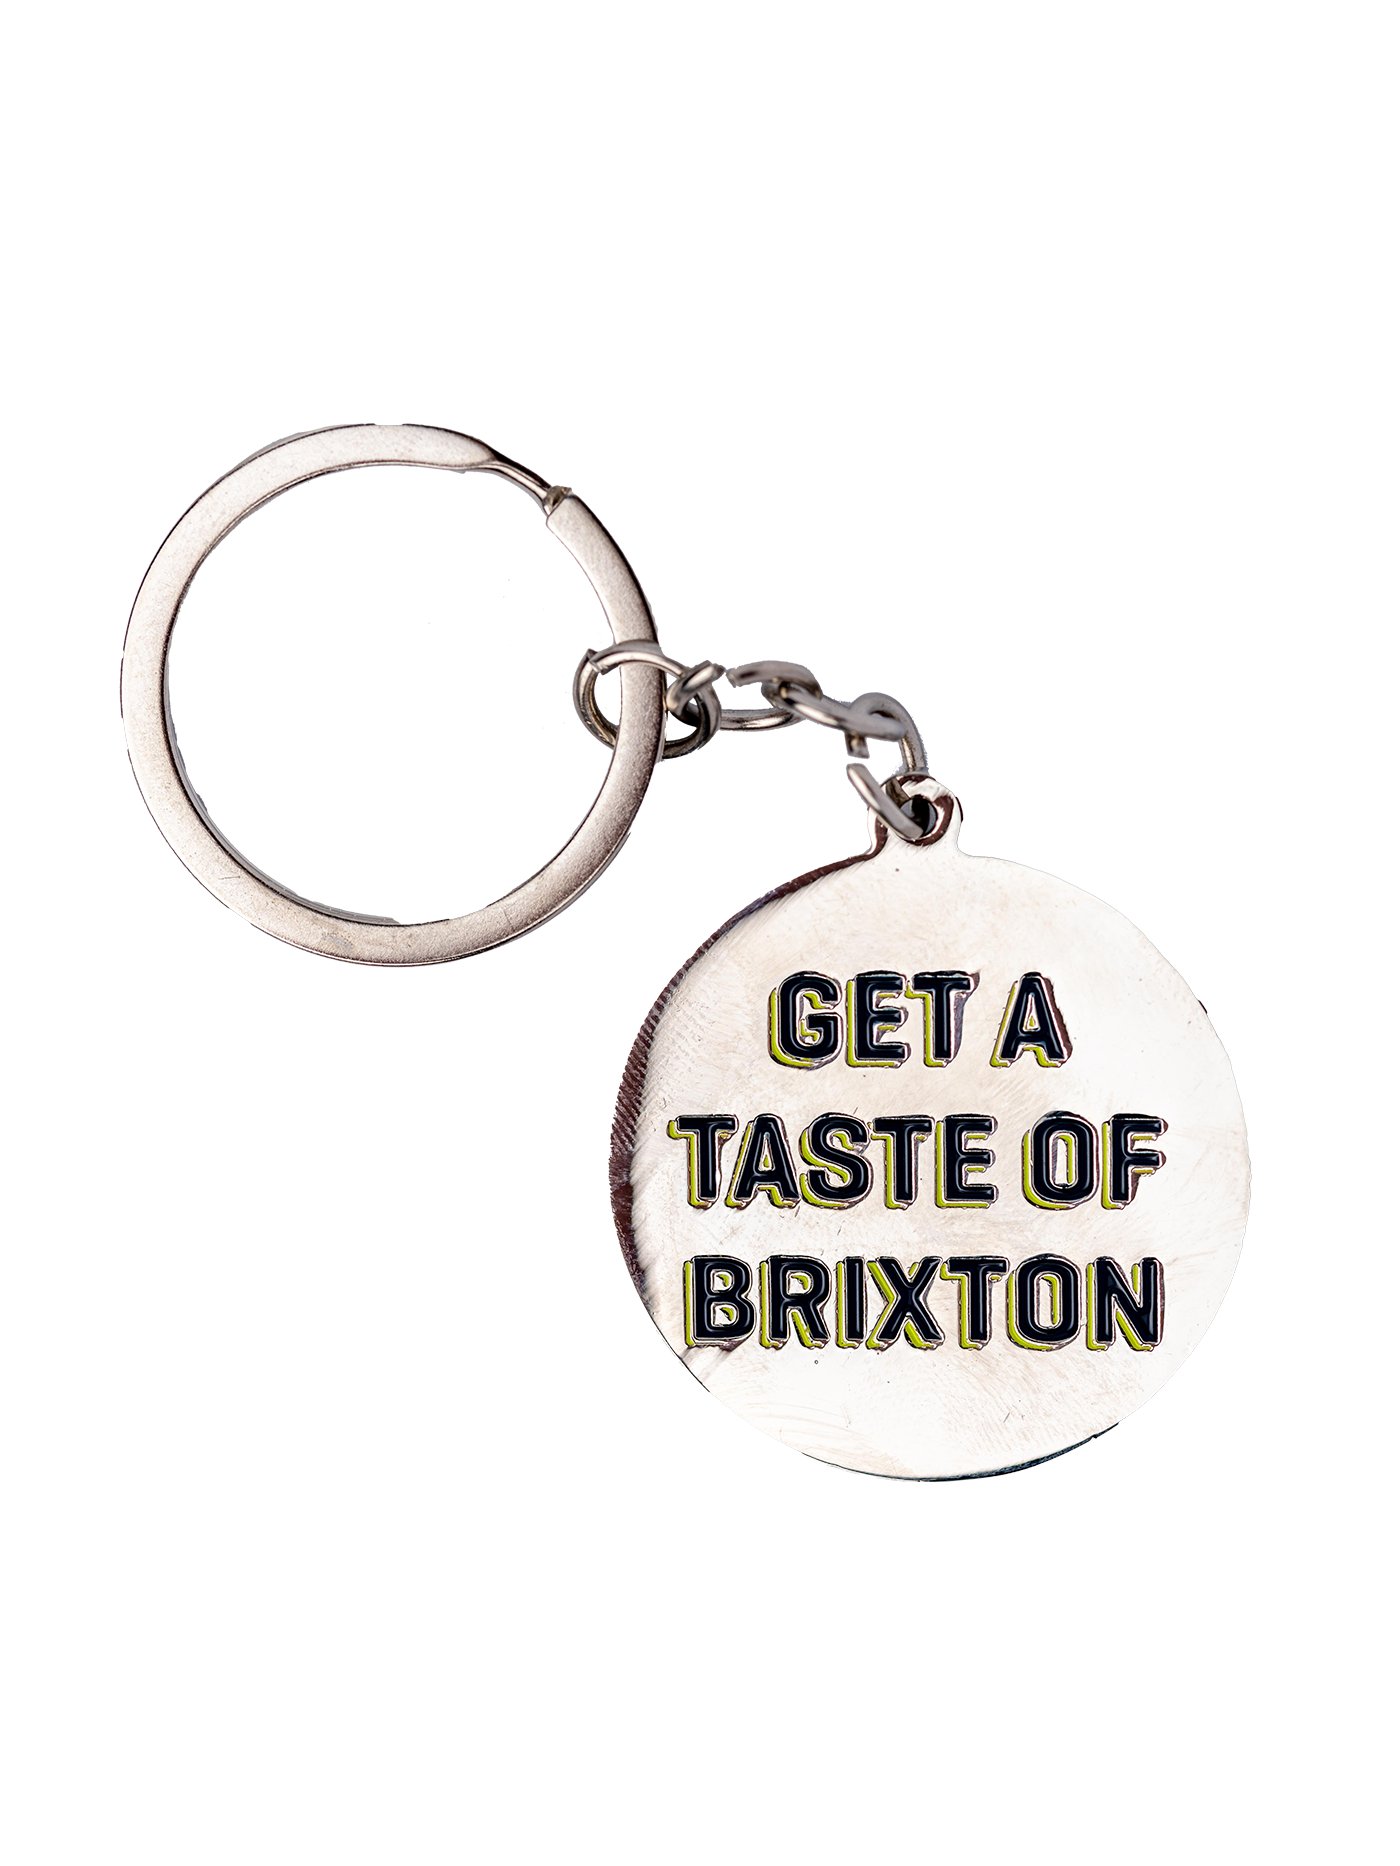 Brixton Brewery Logo Key Ring